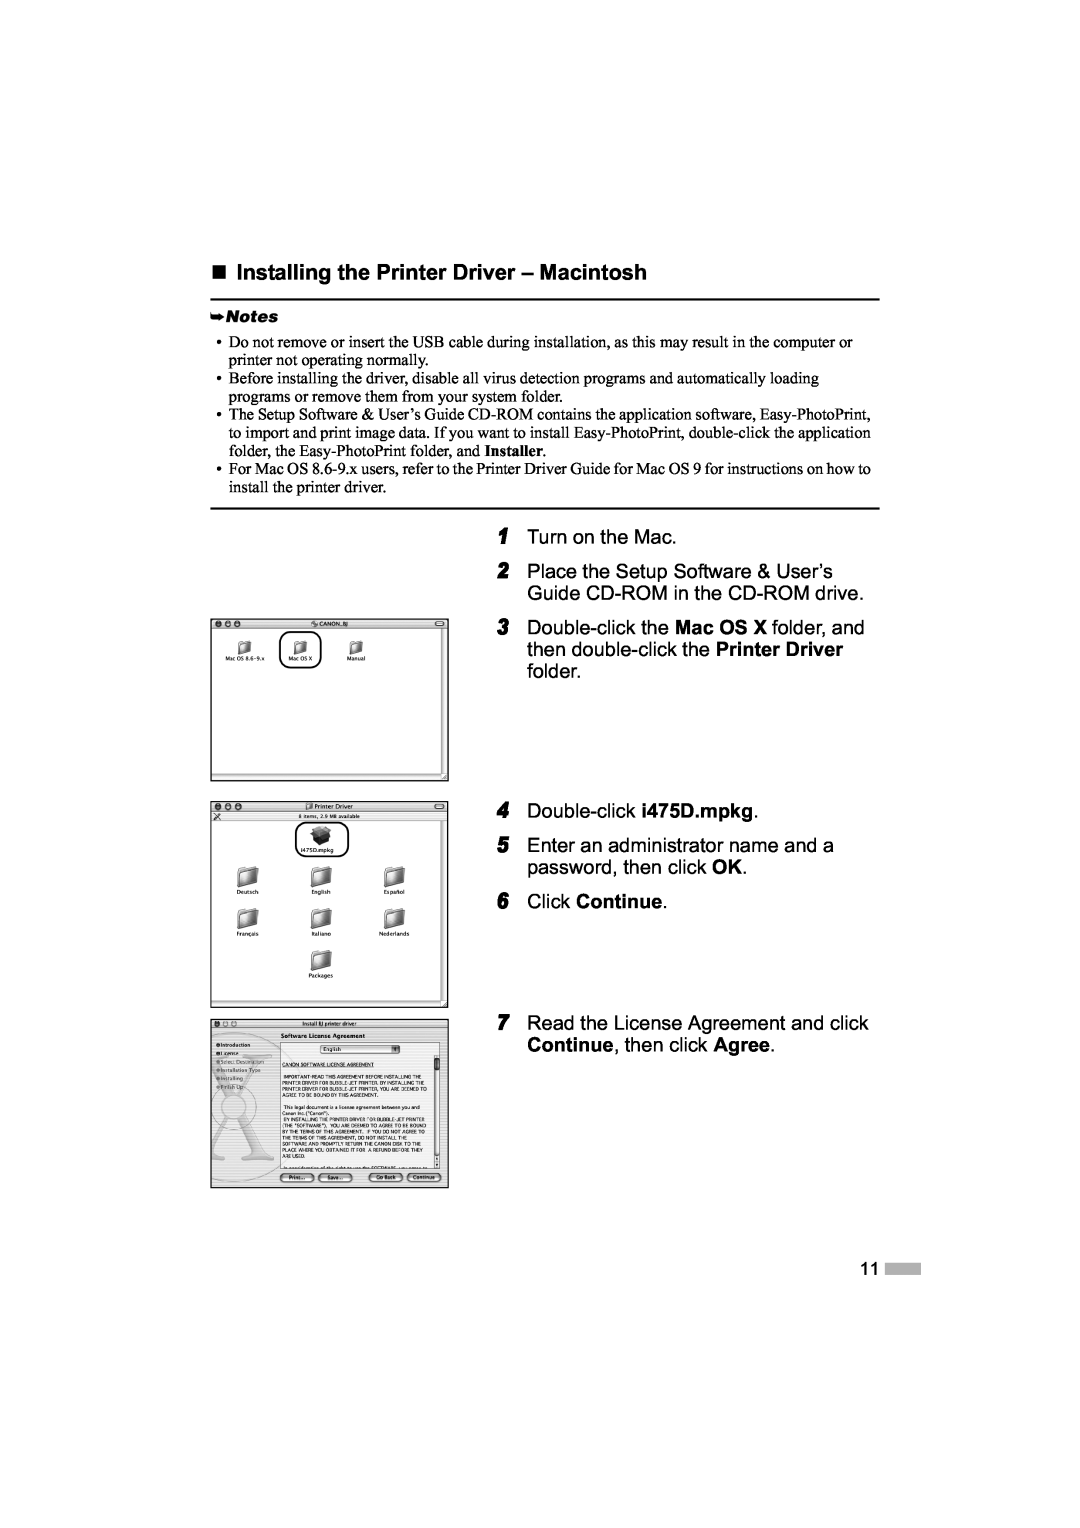 Canon 475D quick start „ Installing the Printer Driver - Macintosh, Click Continue 